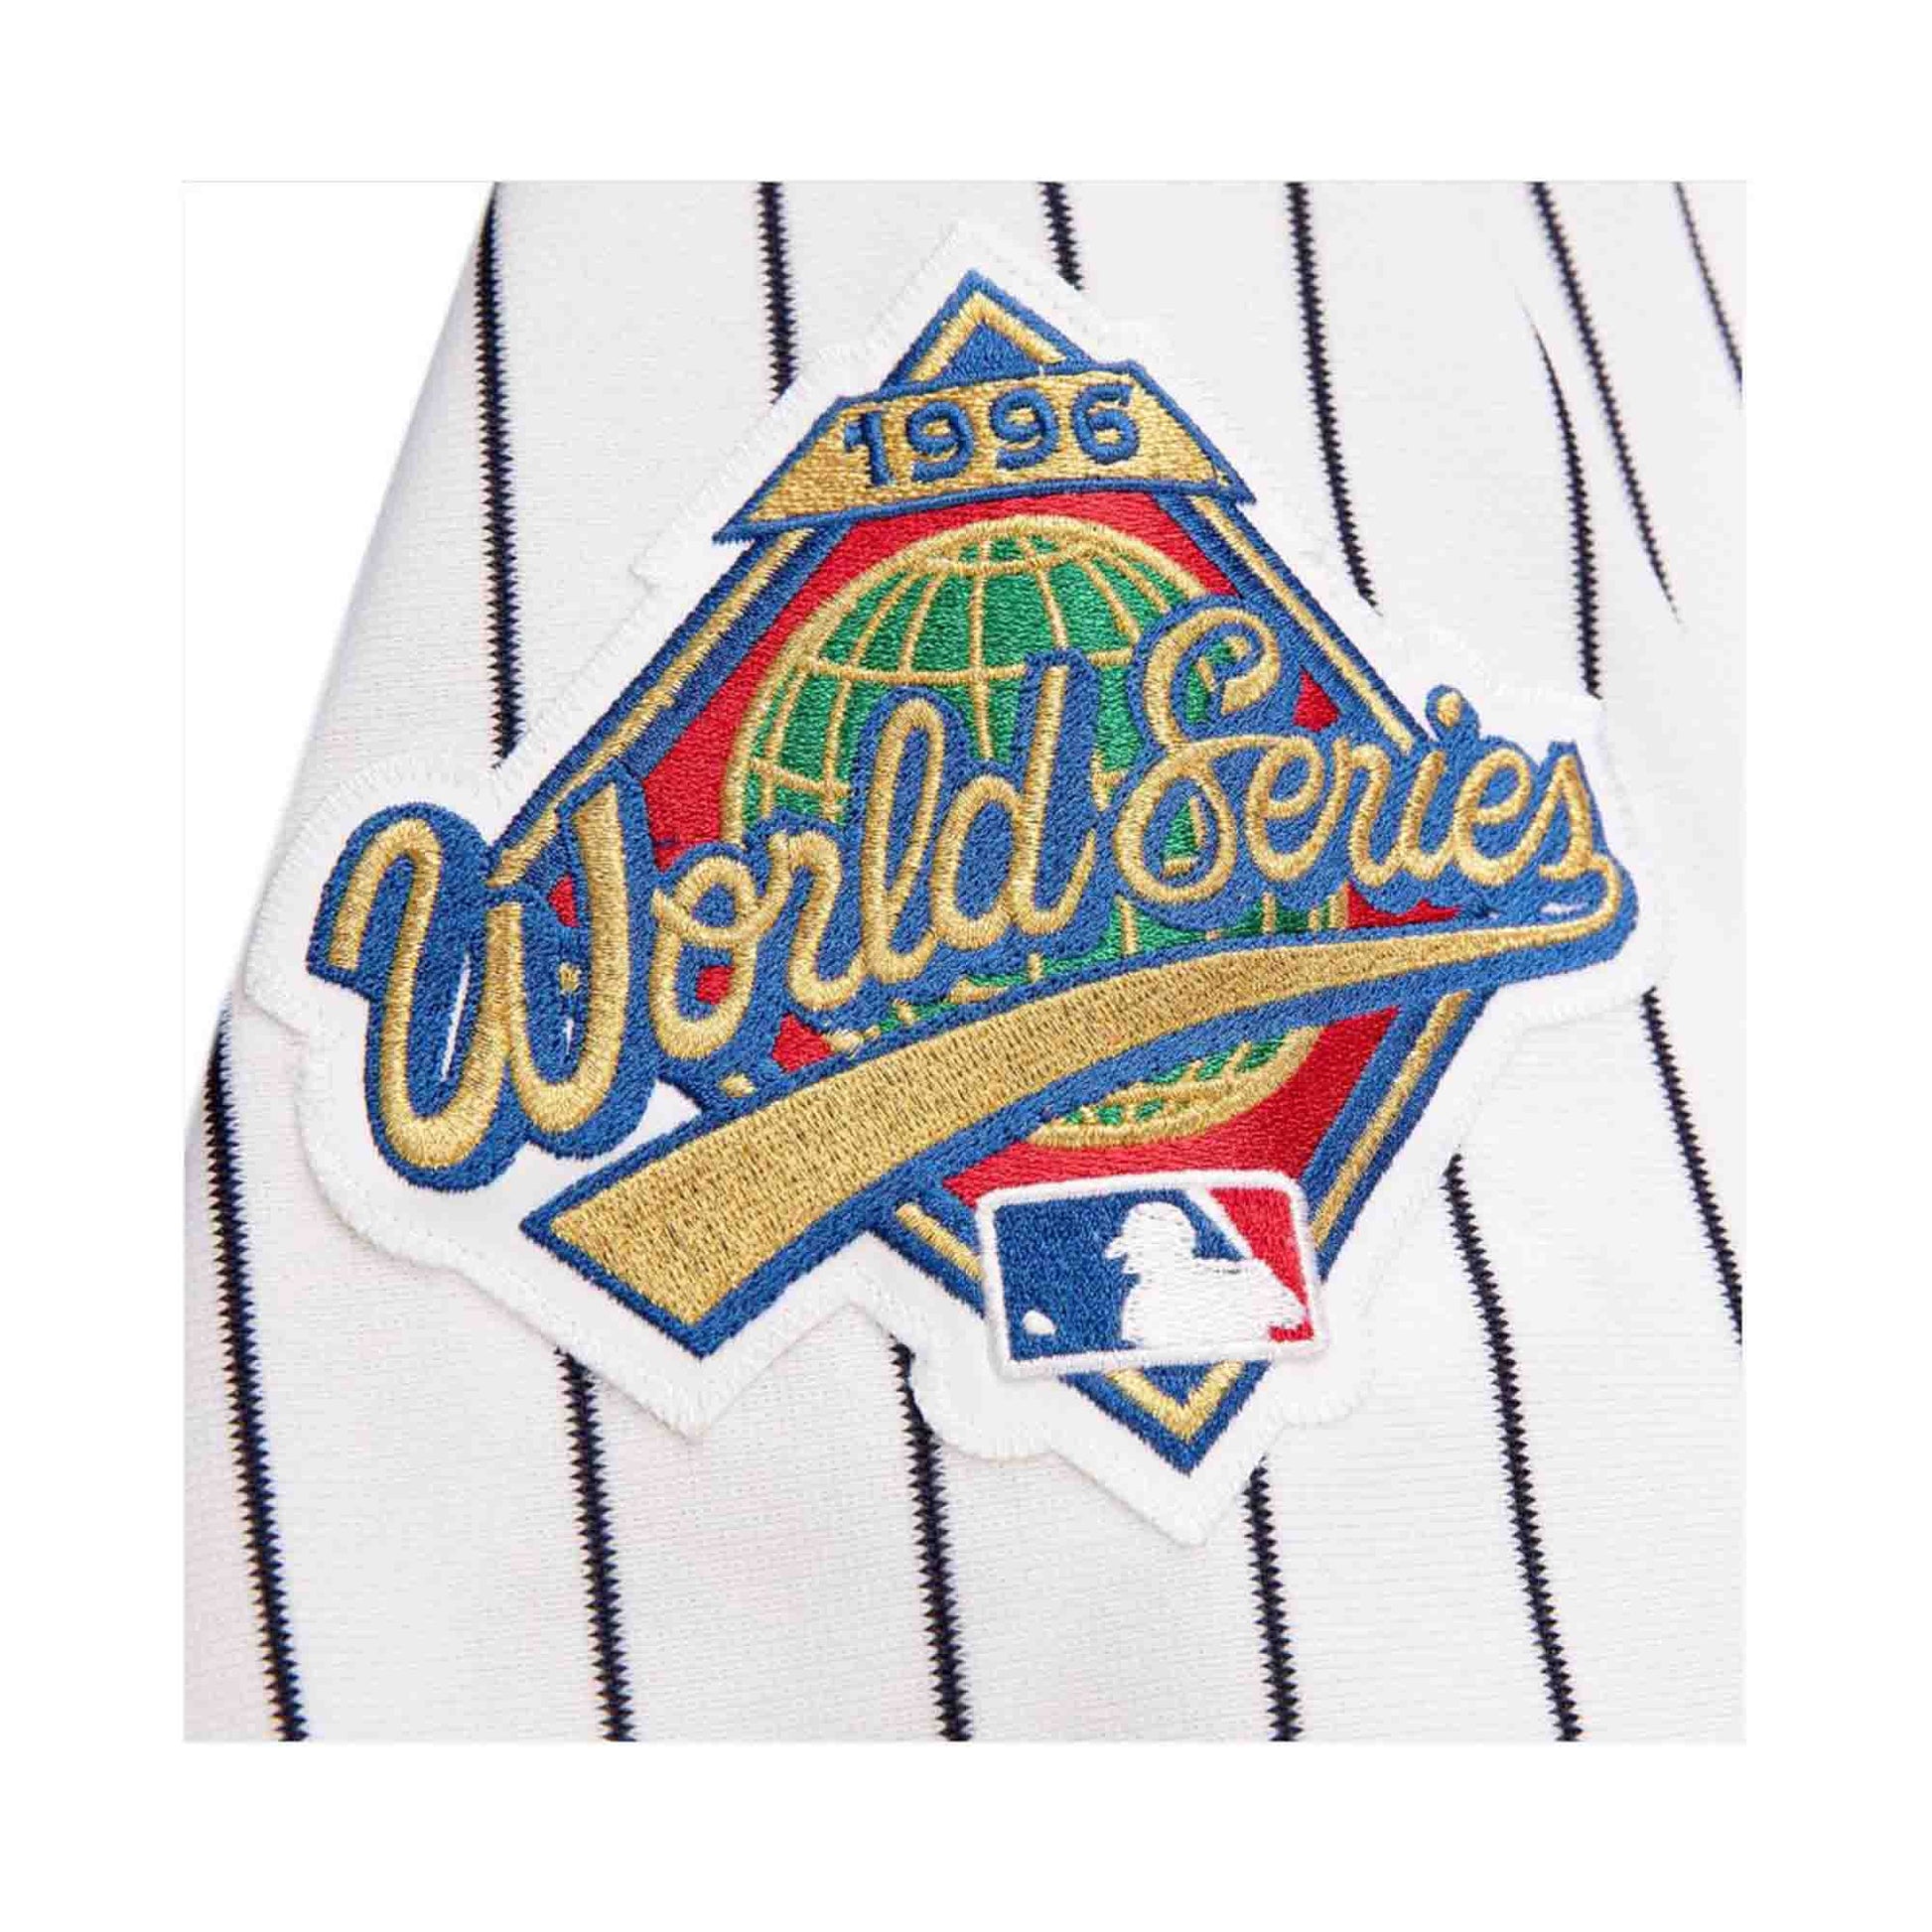 1996 yankees world series jersey